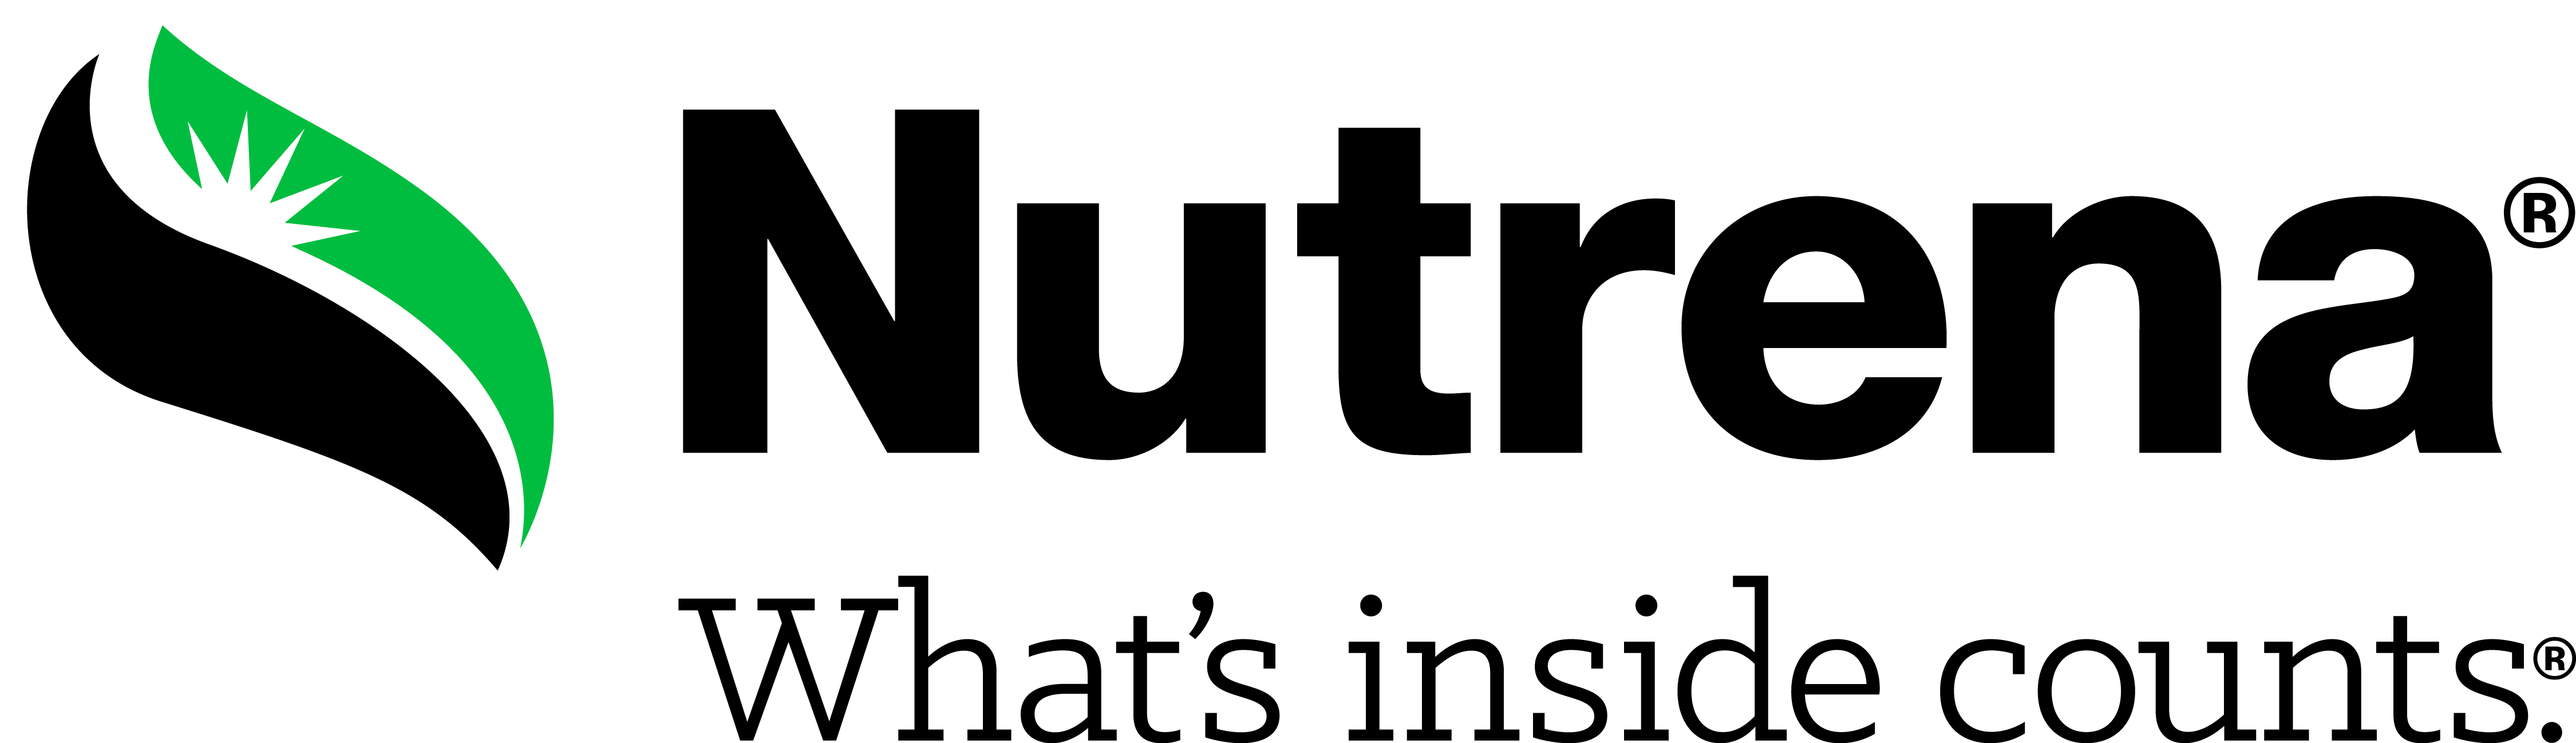 Nutrena_logo_TaglineWIC-stack_RGB_R.png